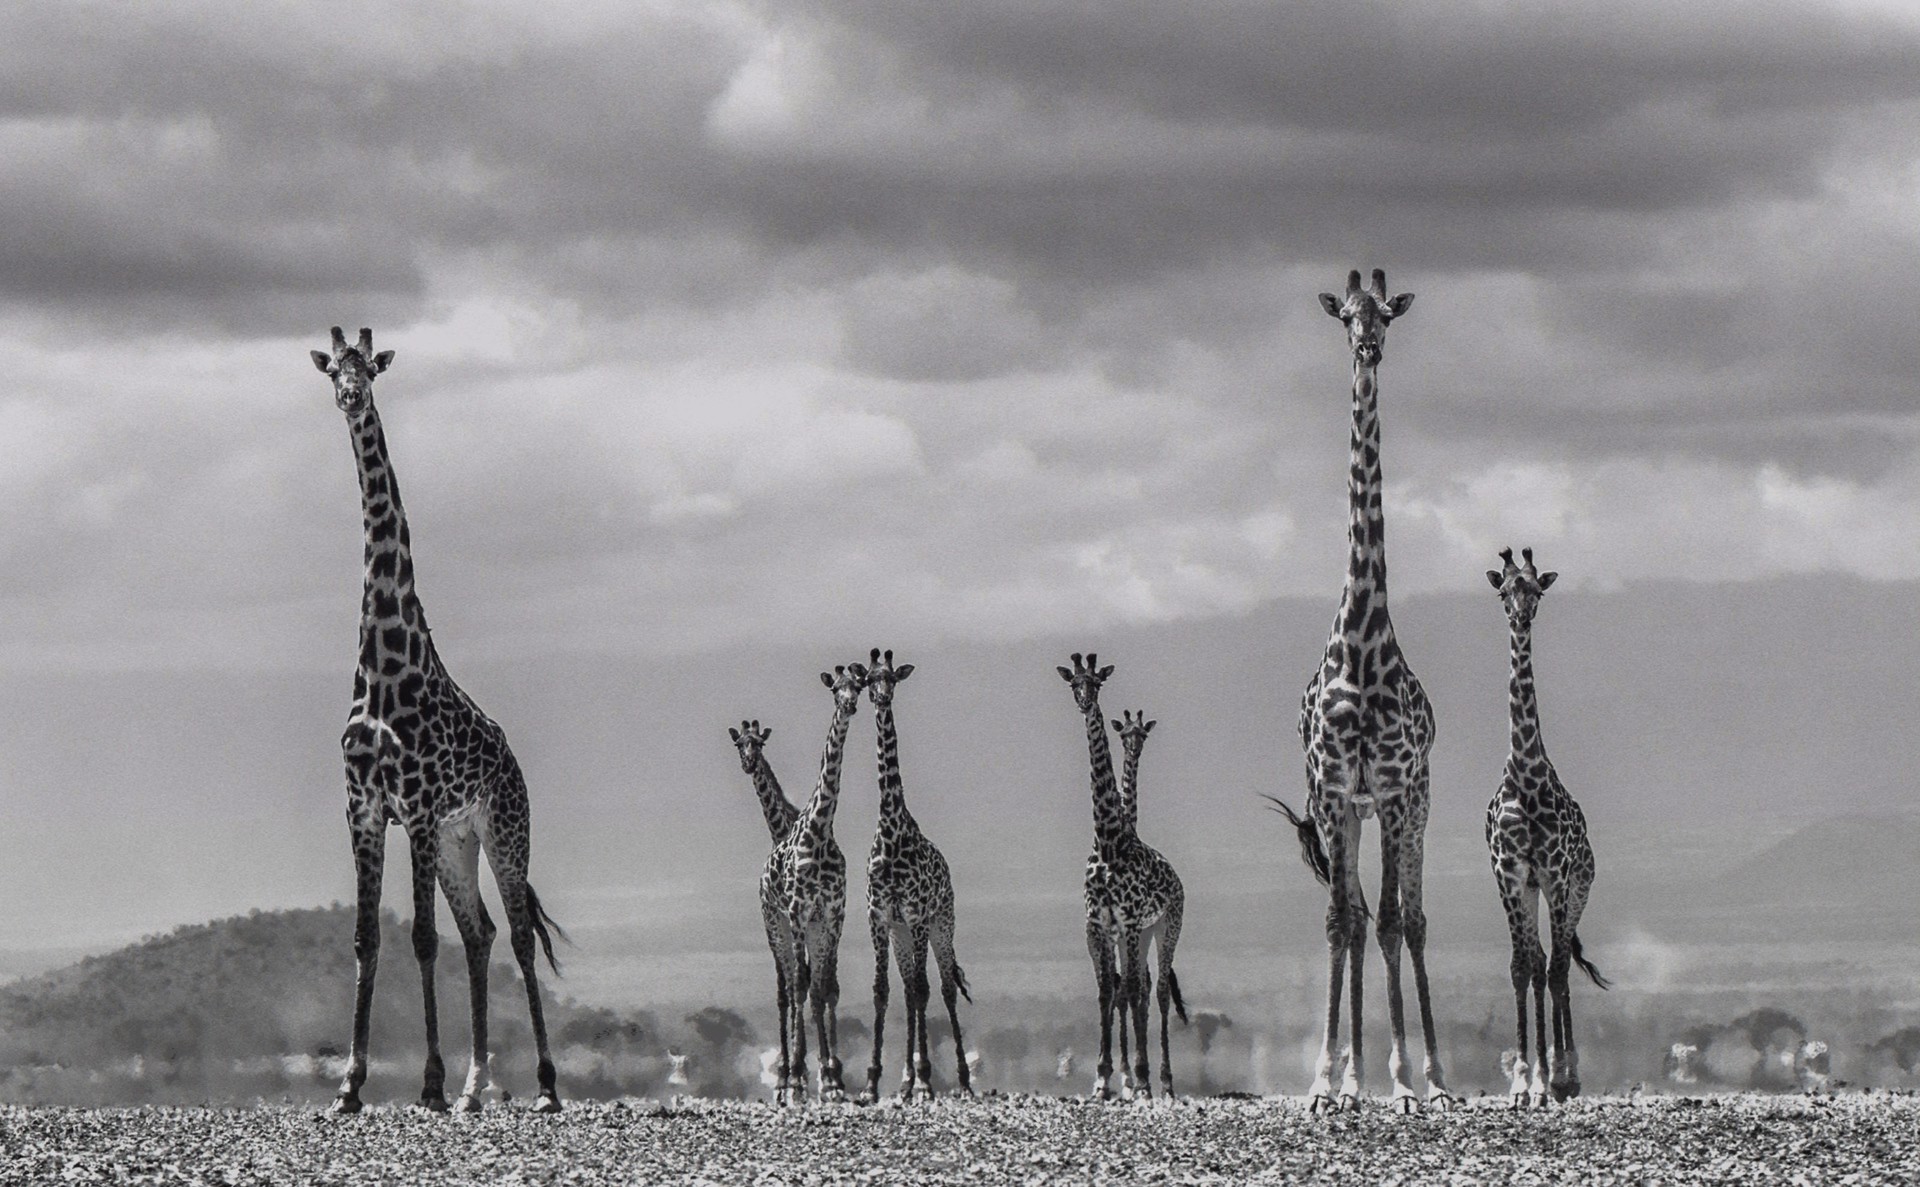 Giraffe City by David Yarrow